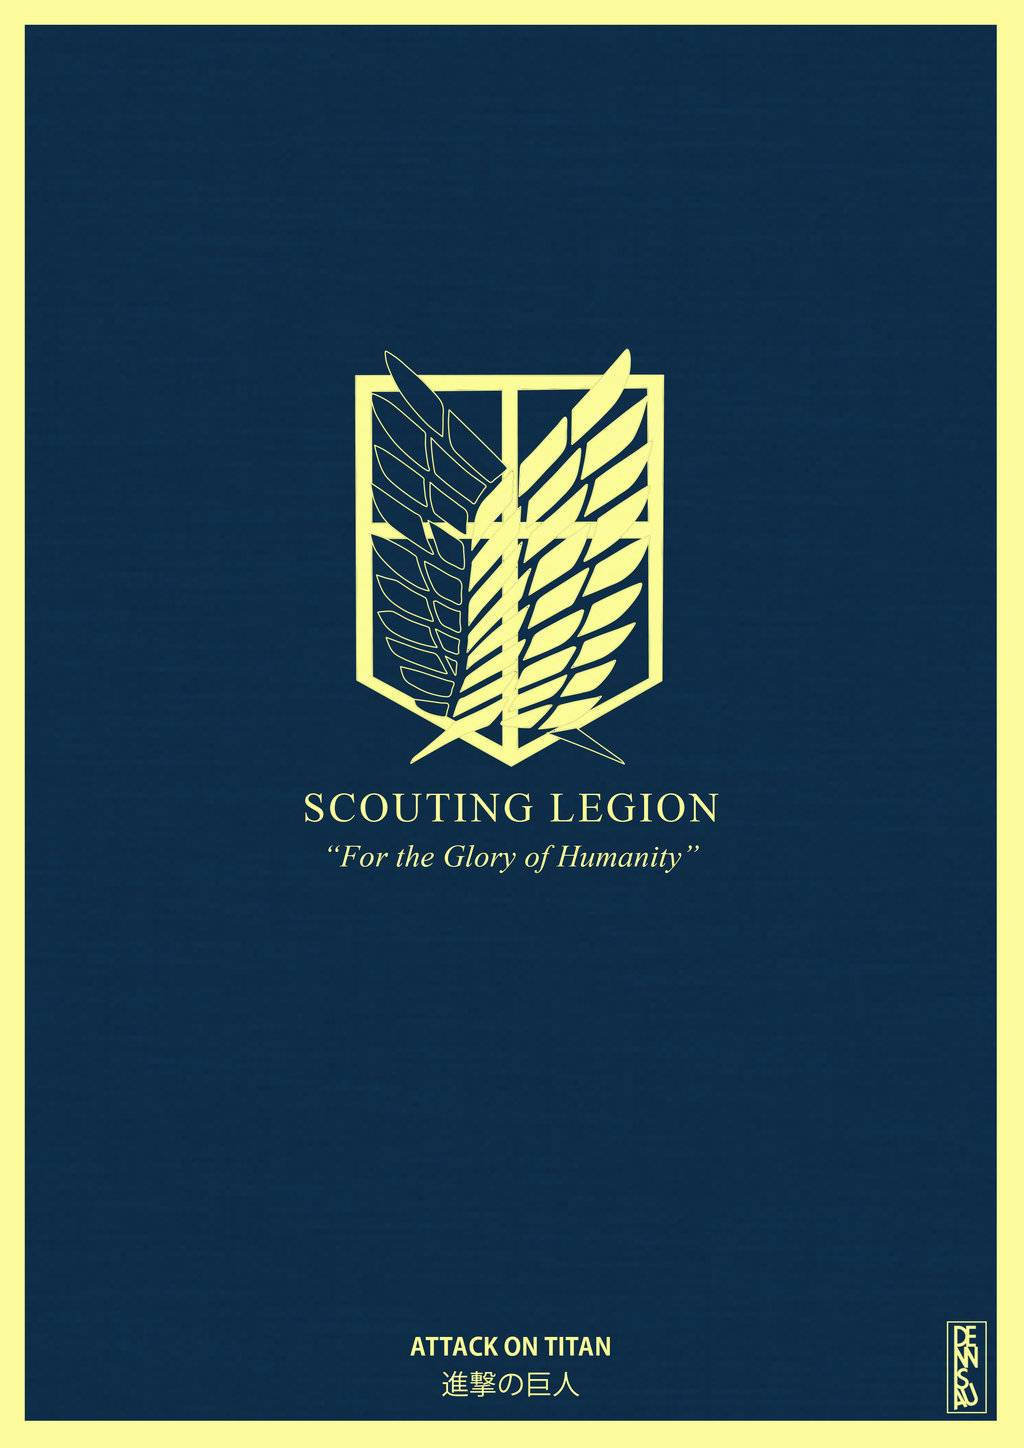 Scouting Legion Logo Attack On Titan Iphone Wallpaper